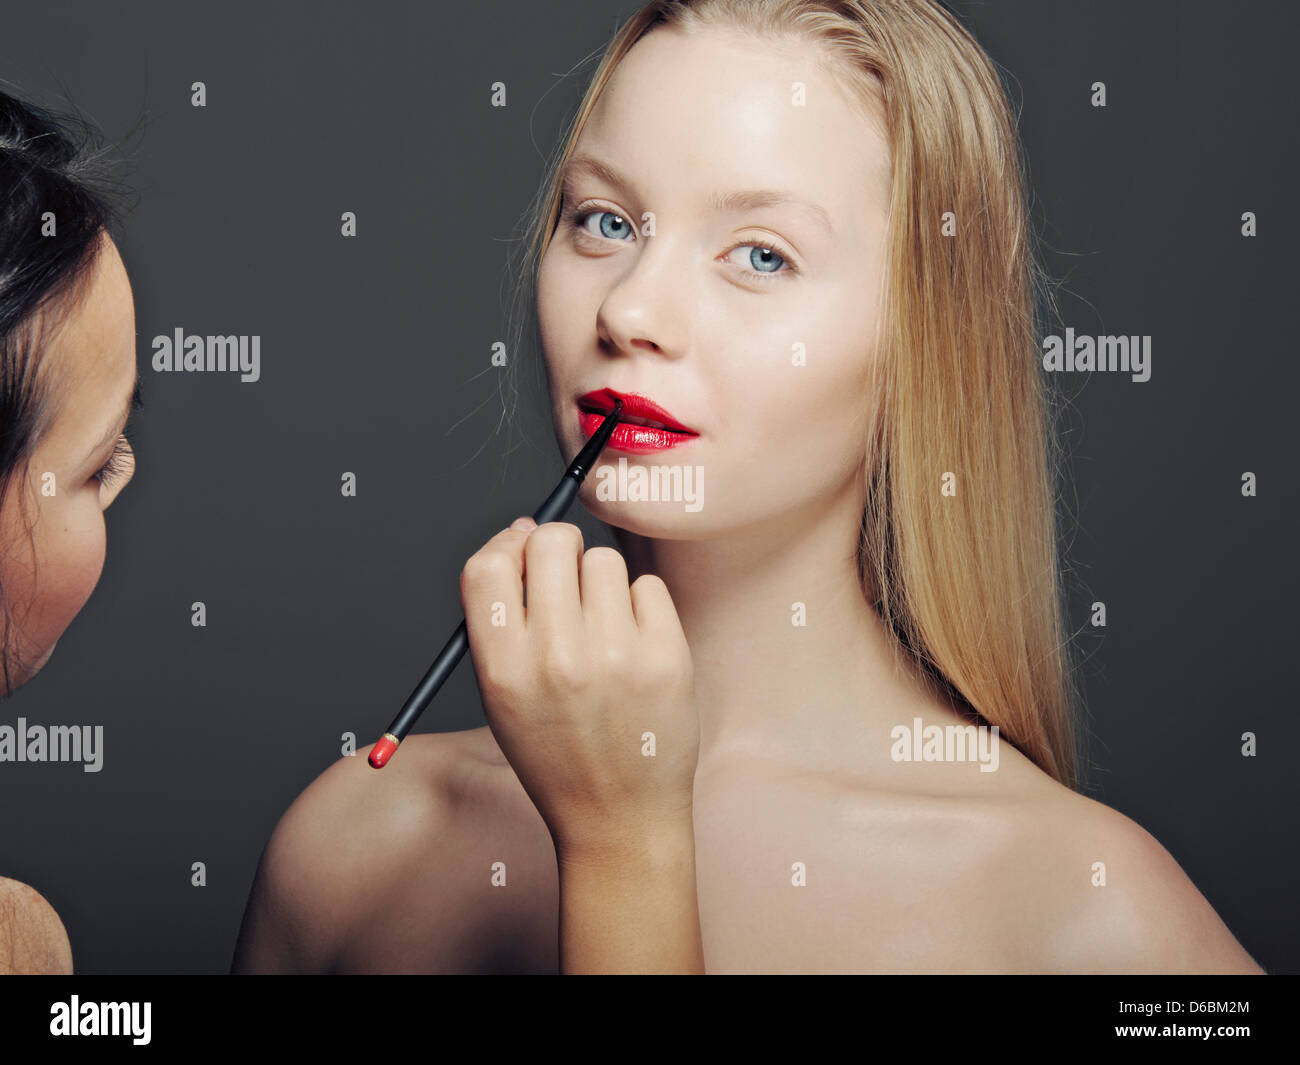 Woman having makeup applied Stock Photo